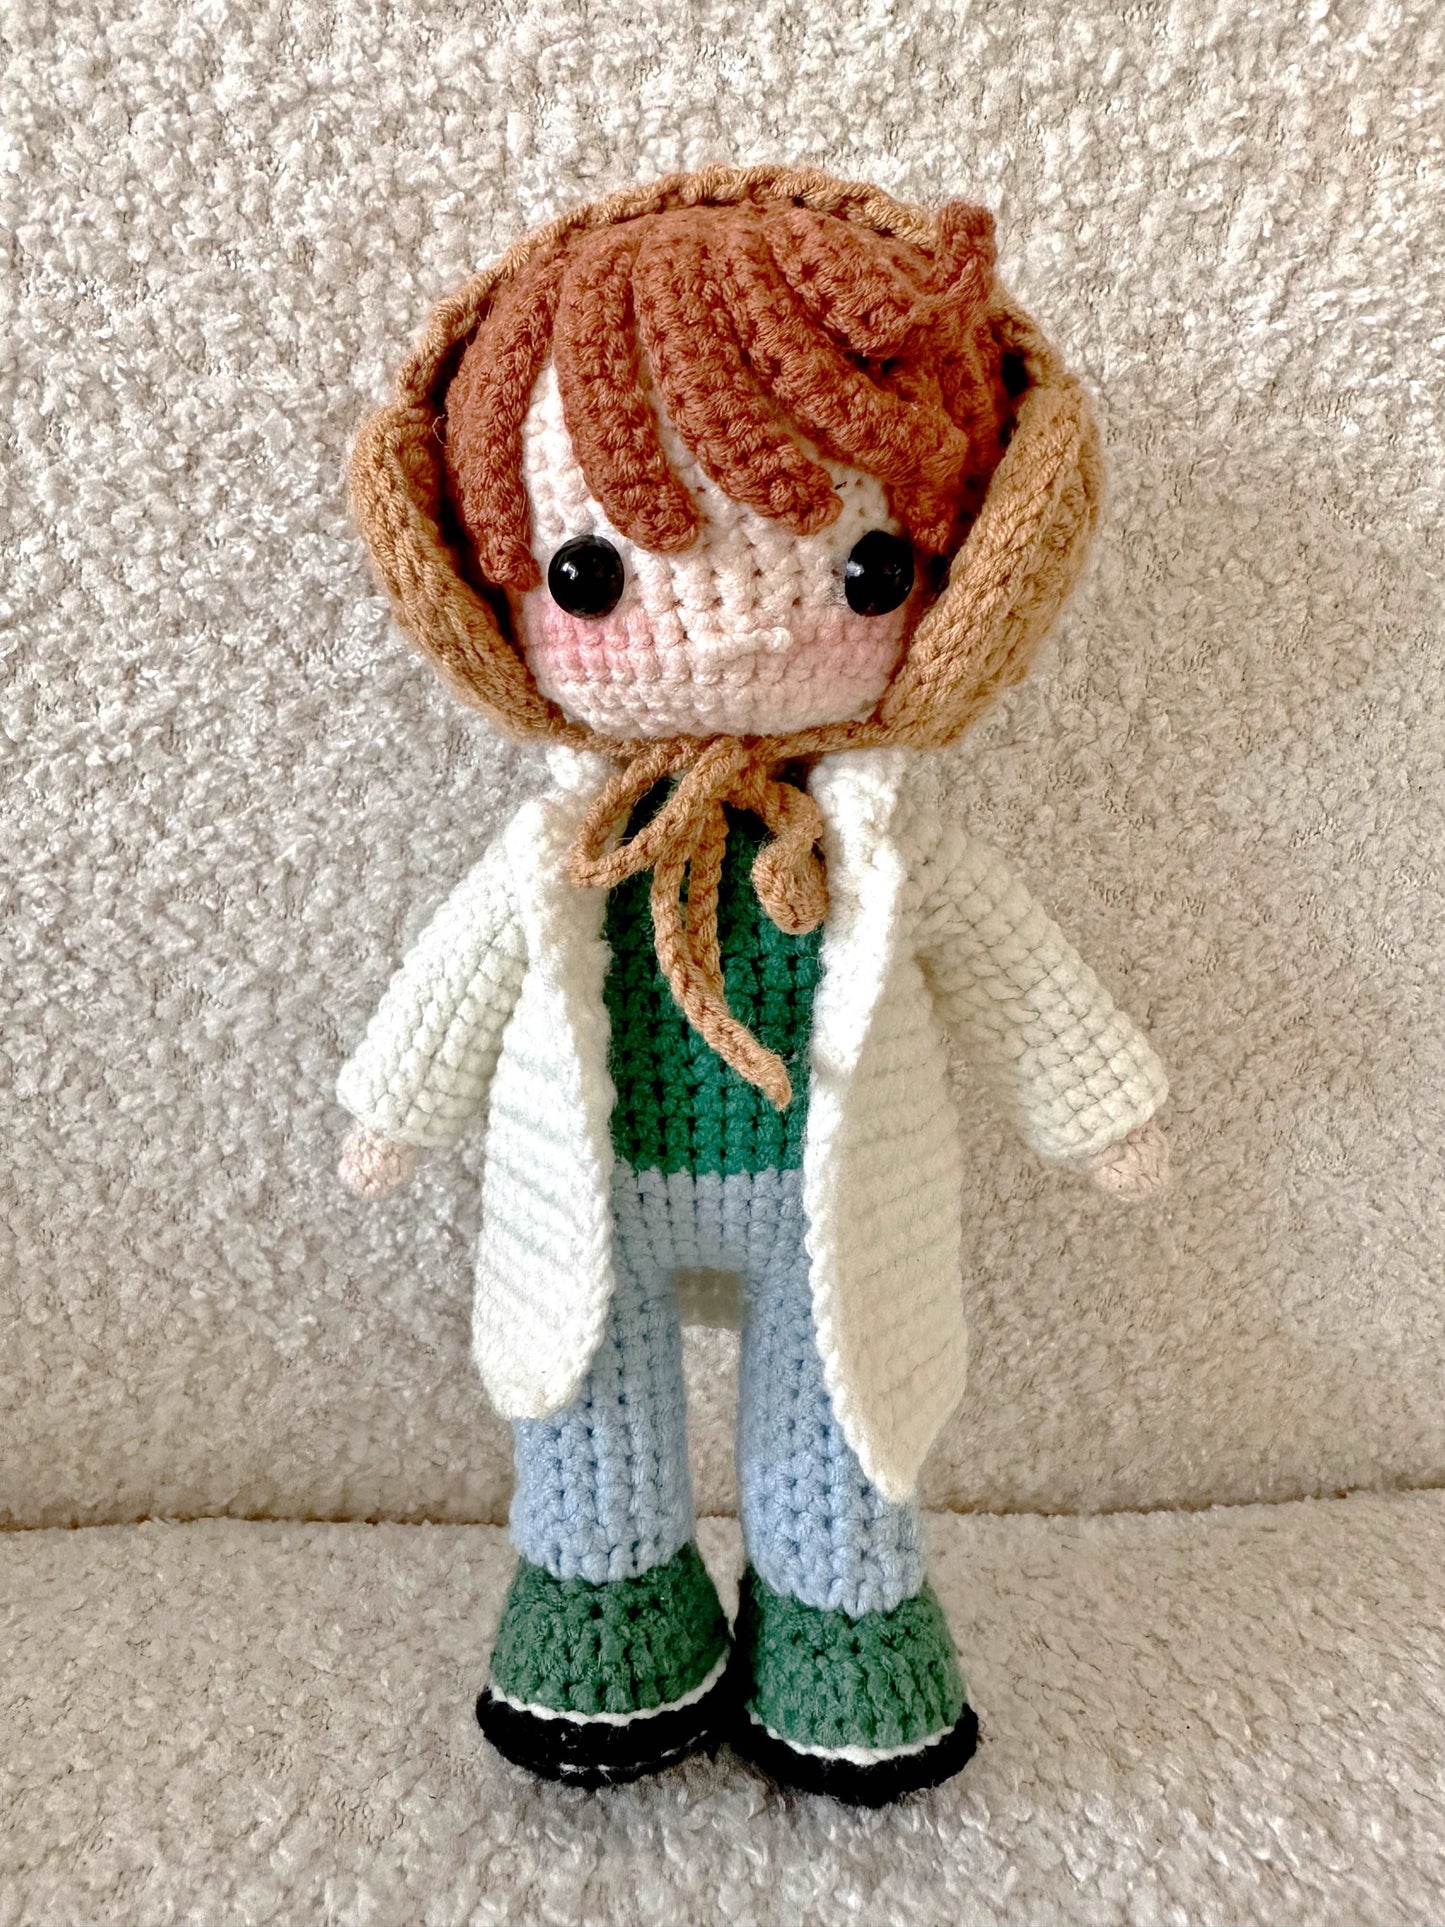 Whimsical Crochet Boy Doll Ornament for Gifting